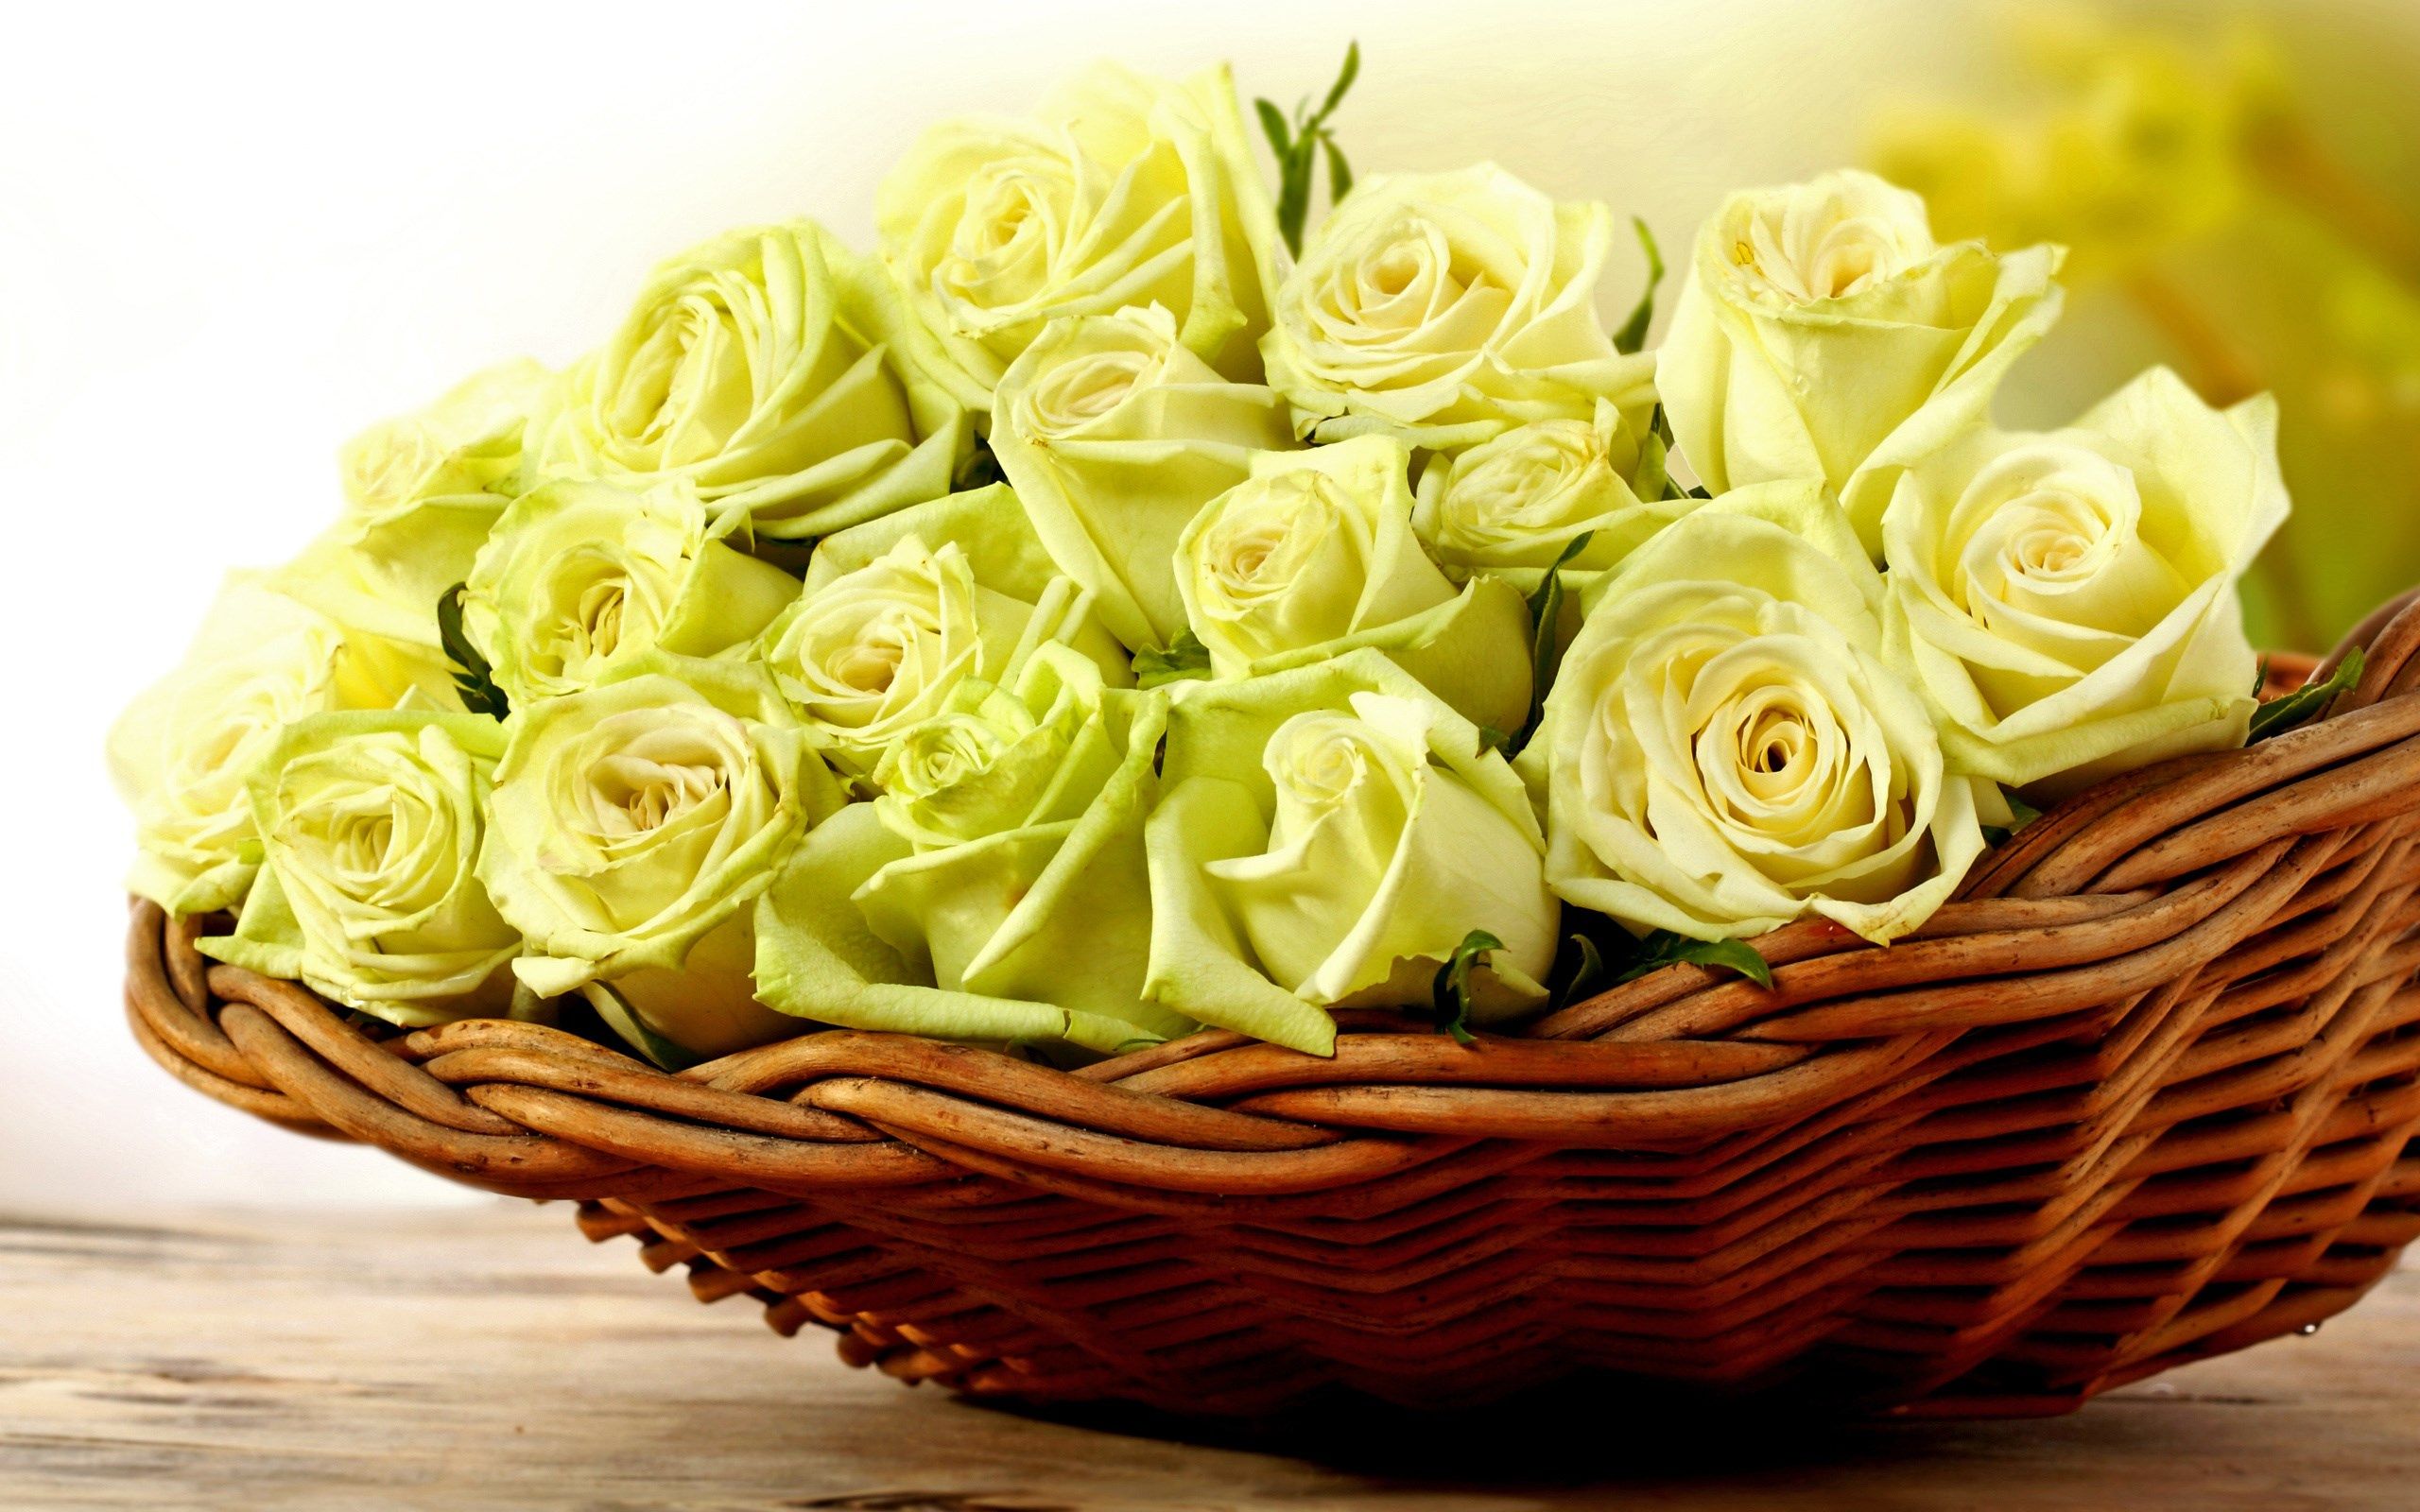 HD wallpaper, Basket, Roses, Yellow